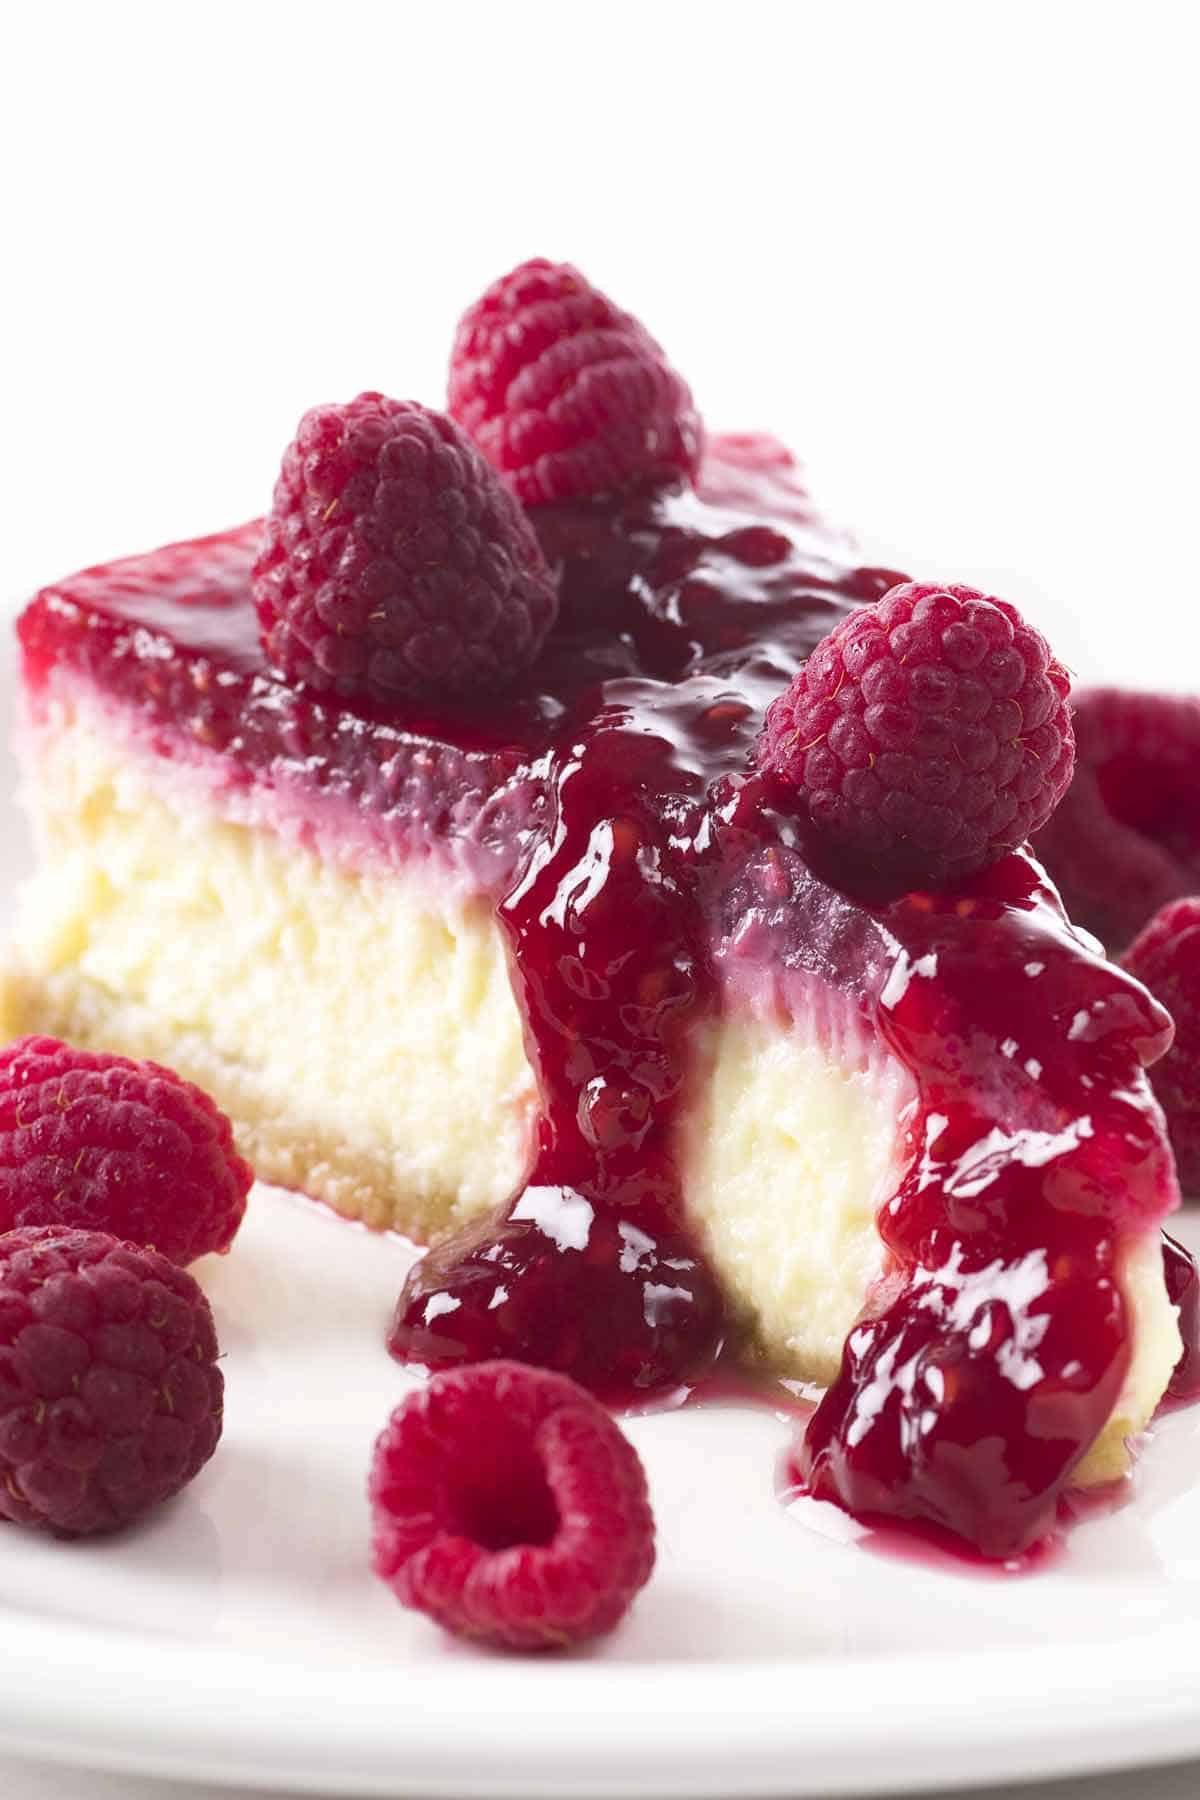 Slice of white chocolate cheesecake with raspberries.